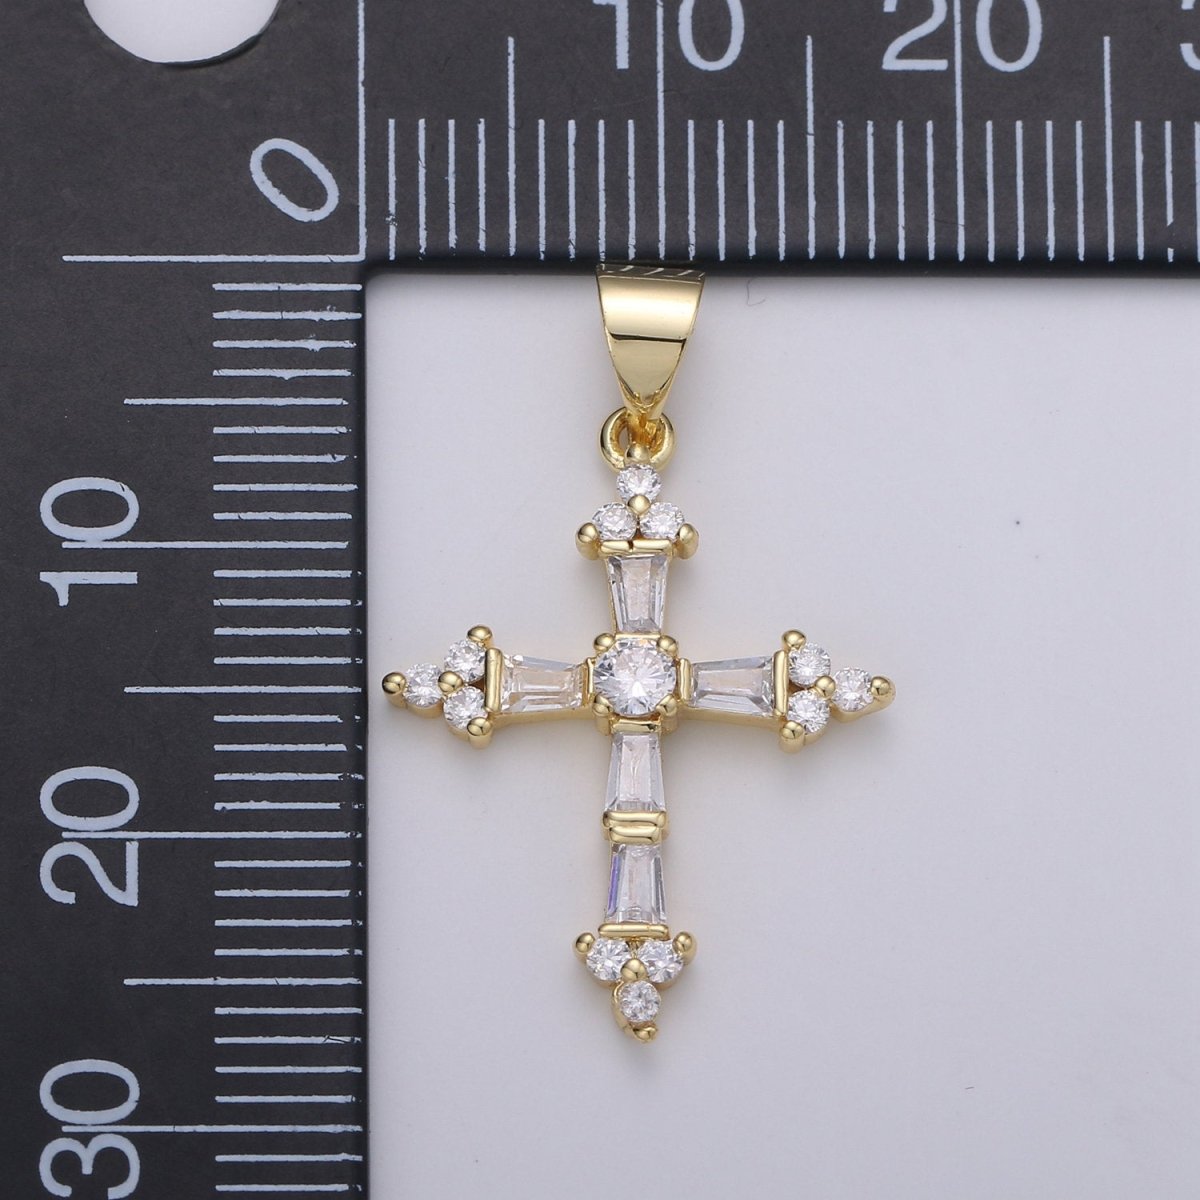 Cubic Cross Pendant, CZ Pendant, Jesus Pendant, Earrings pendant, Bracelet Charm, Necklace Pendant, 14k Gold Filled Jewelry Making N-1320 - DLUXCA